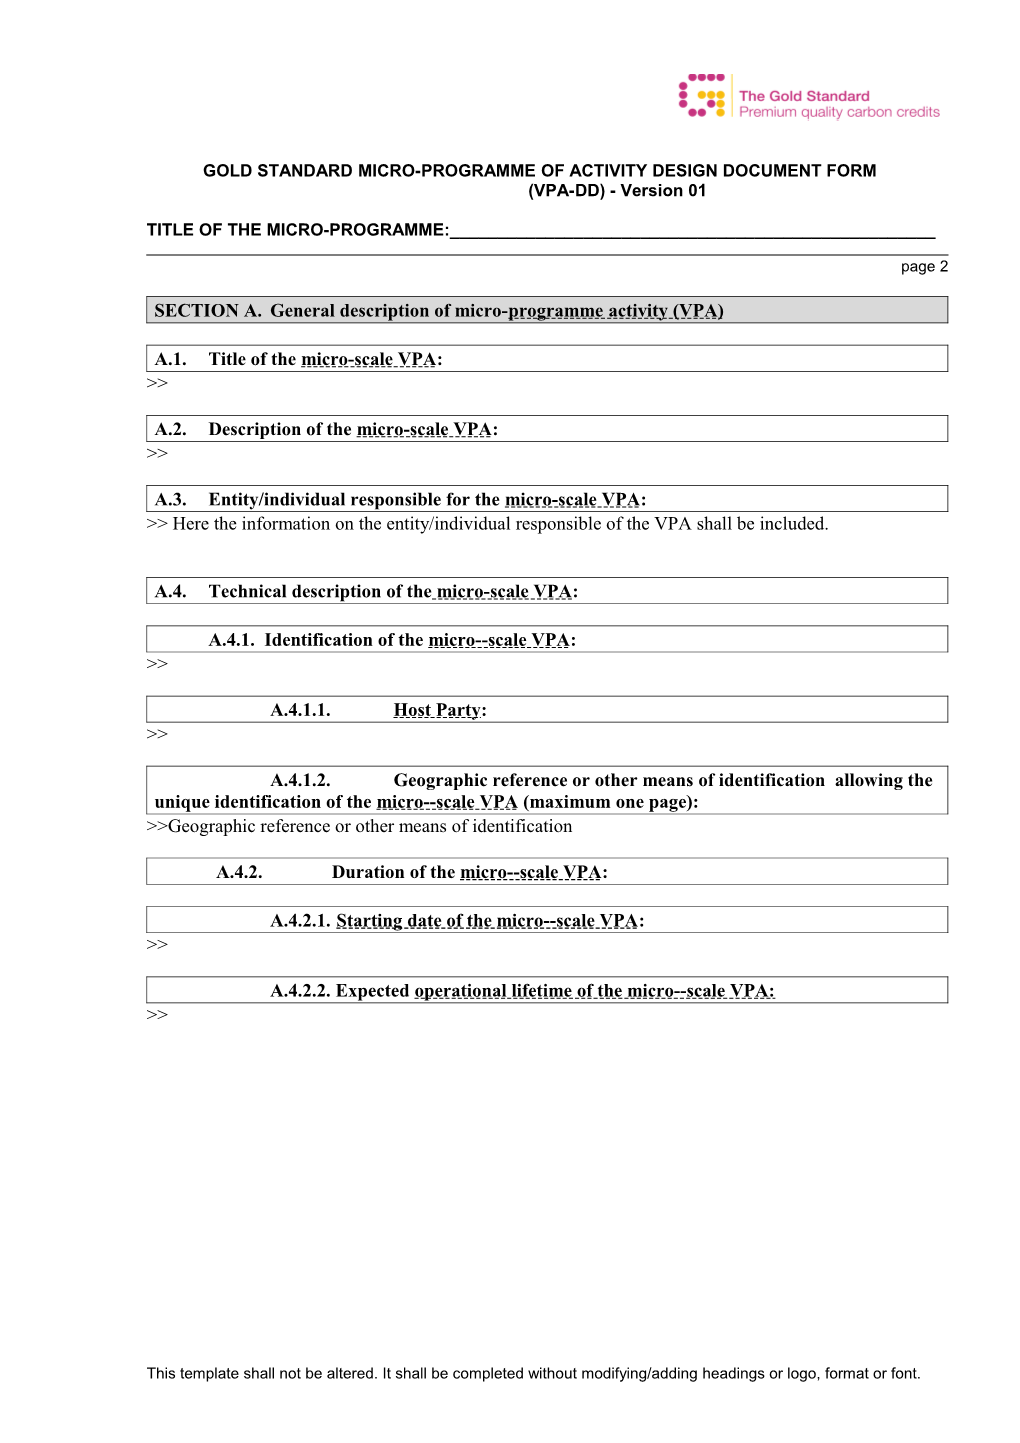 Small-Scale CDM Programme Activity Design Document Form (Poa-SSC-CPA-DD). (Version 01)